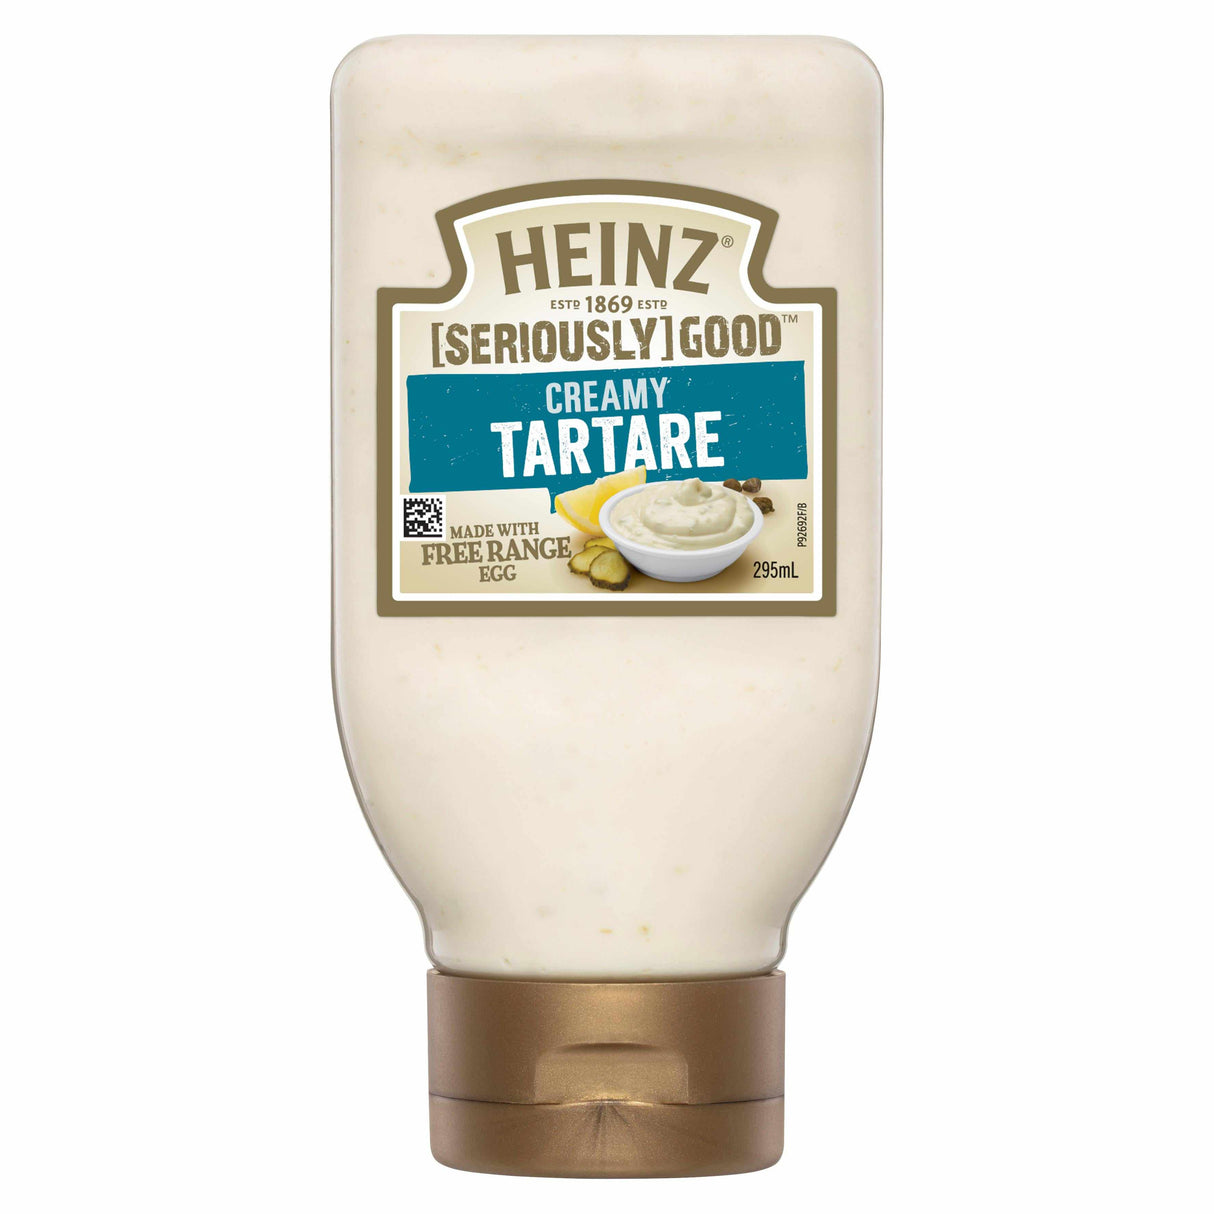 Heinz [SERIOUSLY] GOOD Creamy Tartare Sauce 295ml